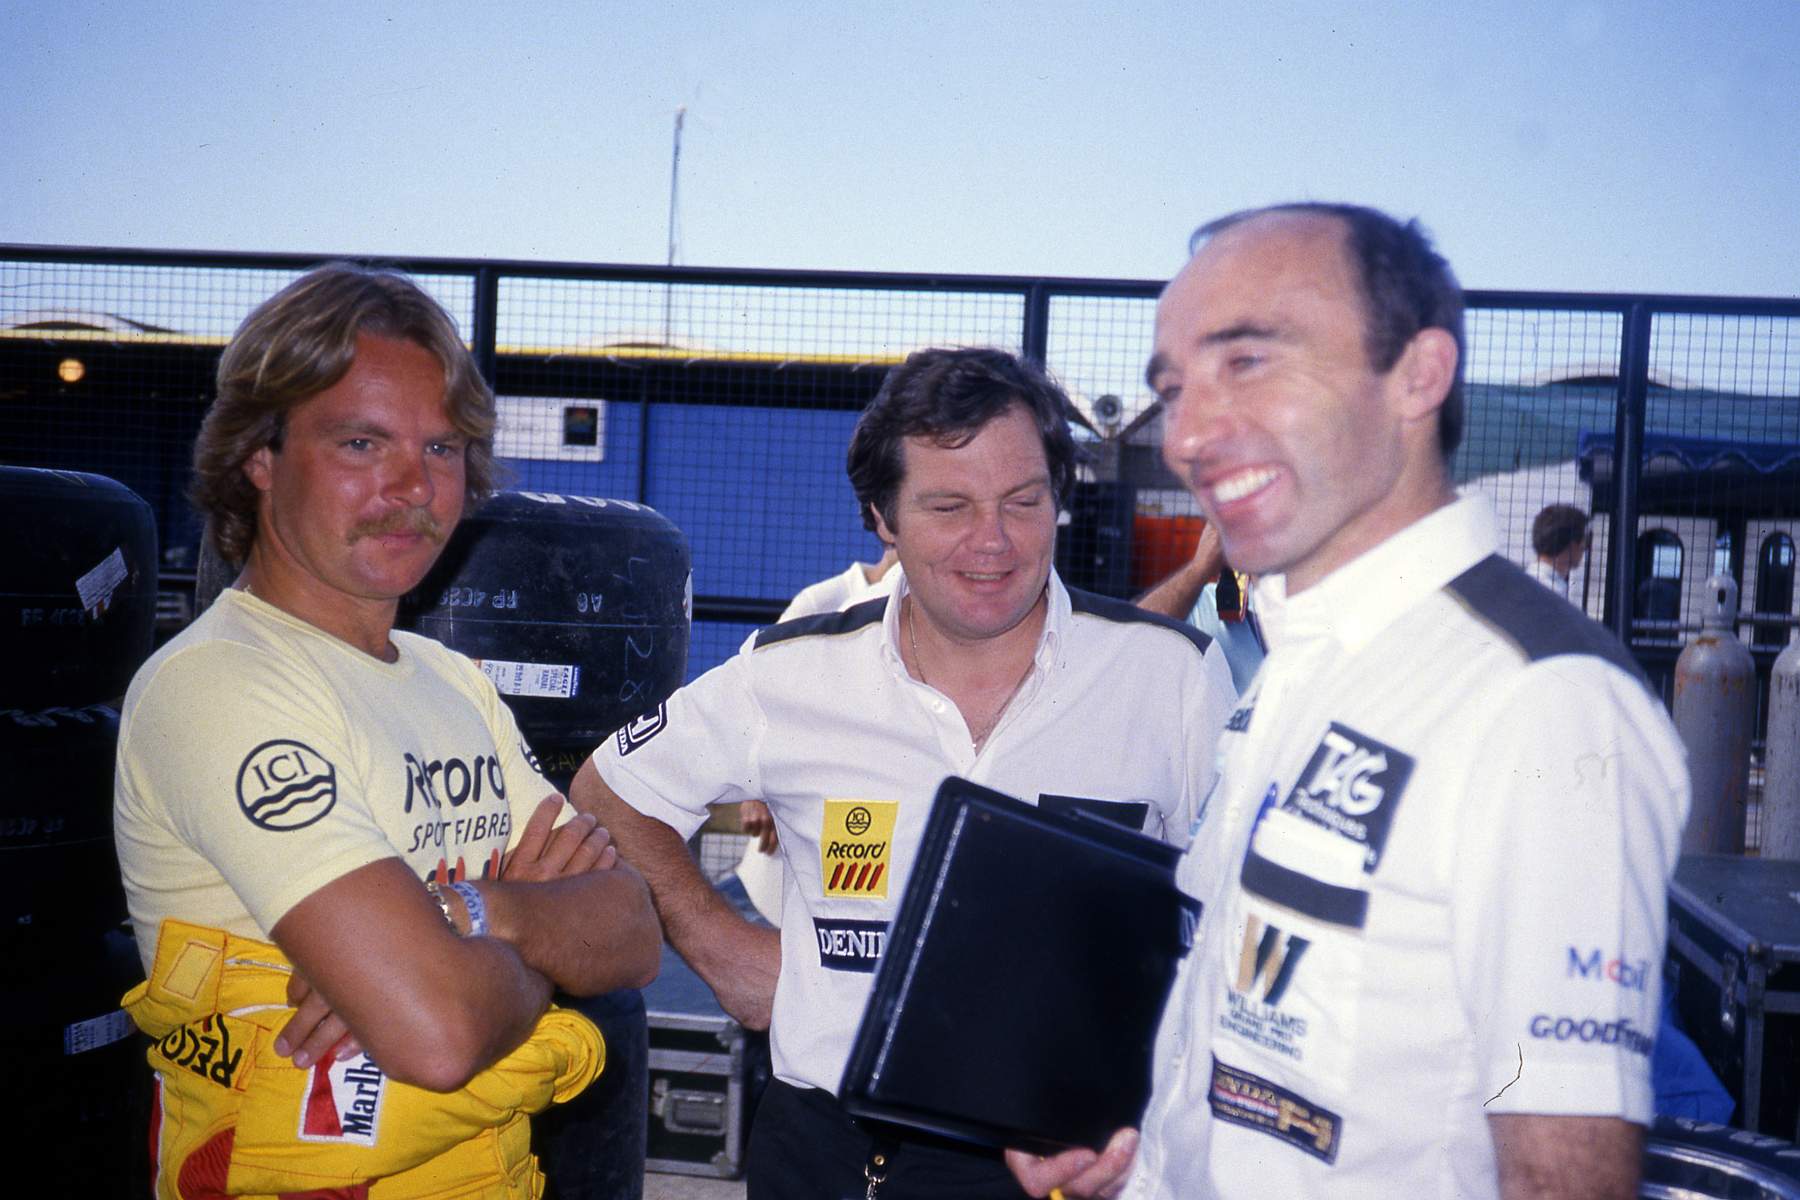 German Grand Prix Hockenheim (GER) 03-05 08 1984